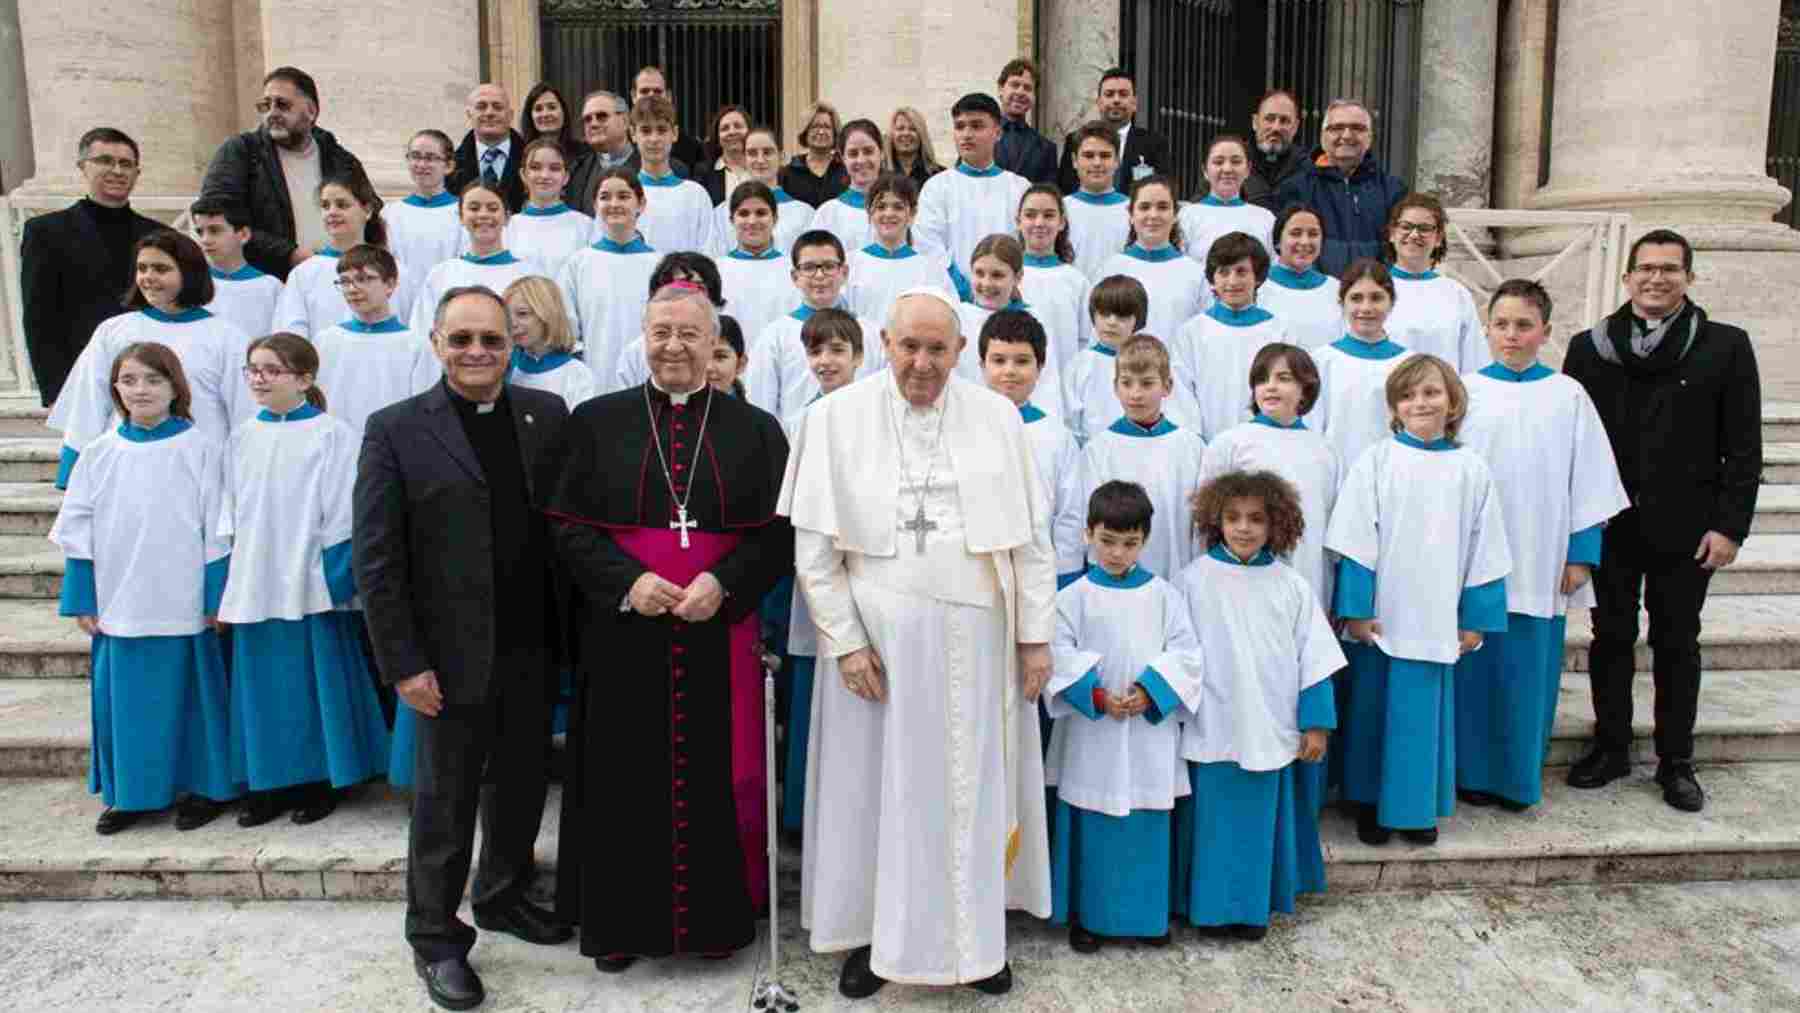 Los ‘Blauets’ de Lluc en una foto junto al papa Francisco. SANTUARI DE LLUC